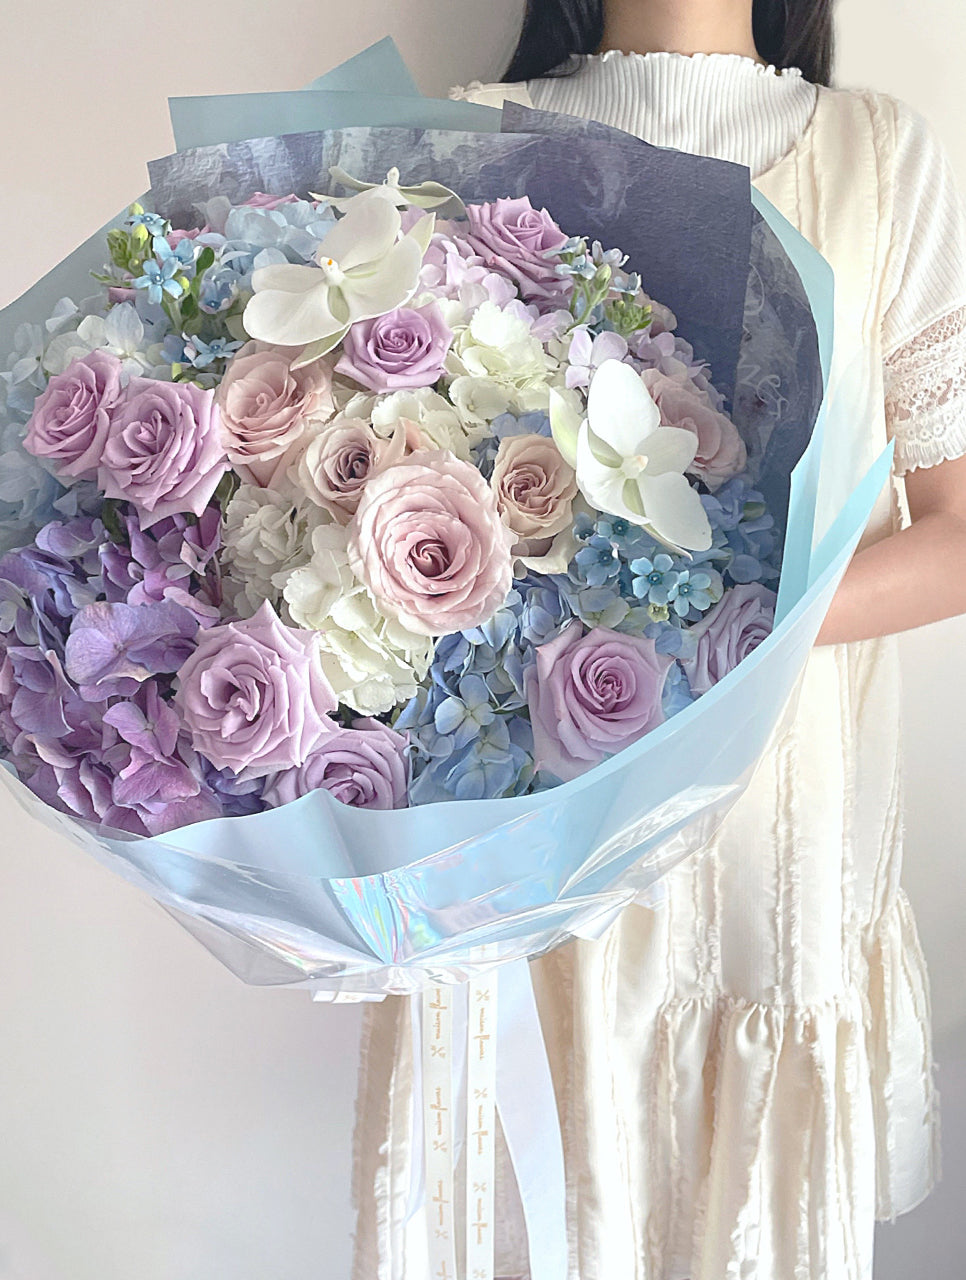 繡球玫瑰花束, Manta Rose Bouquet